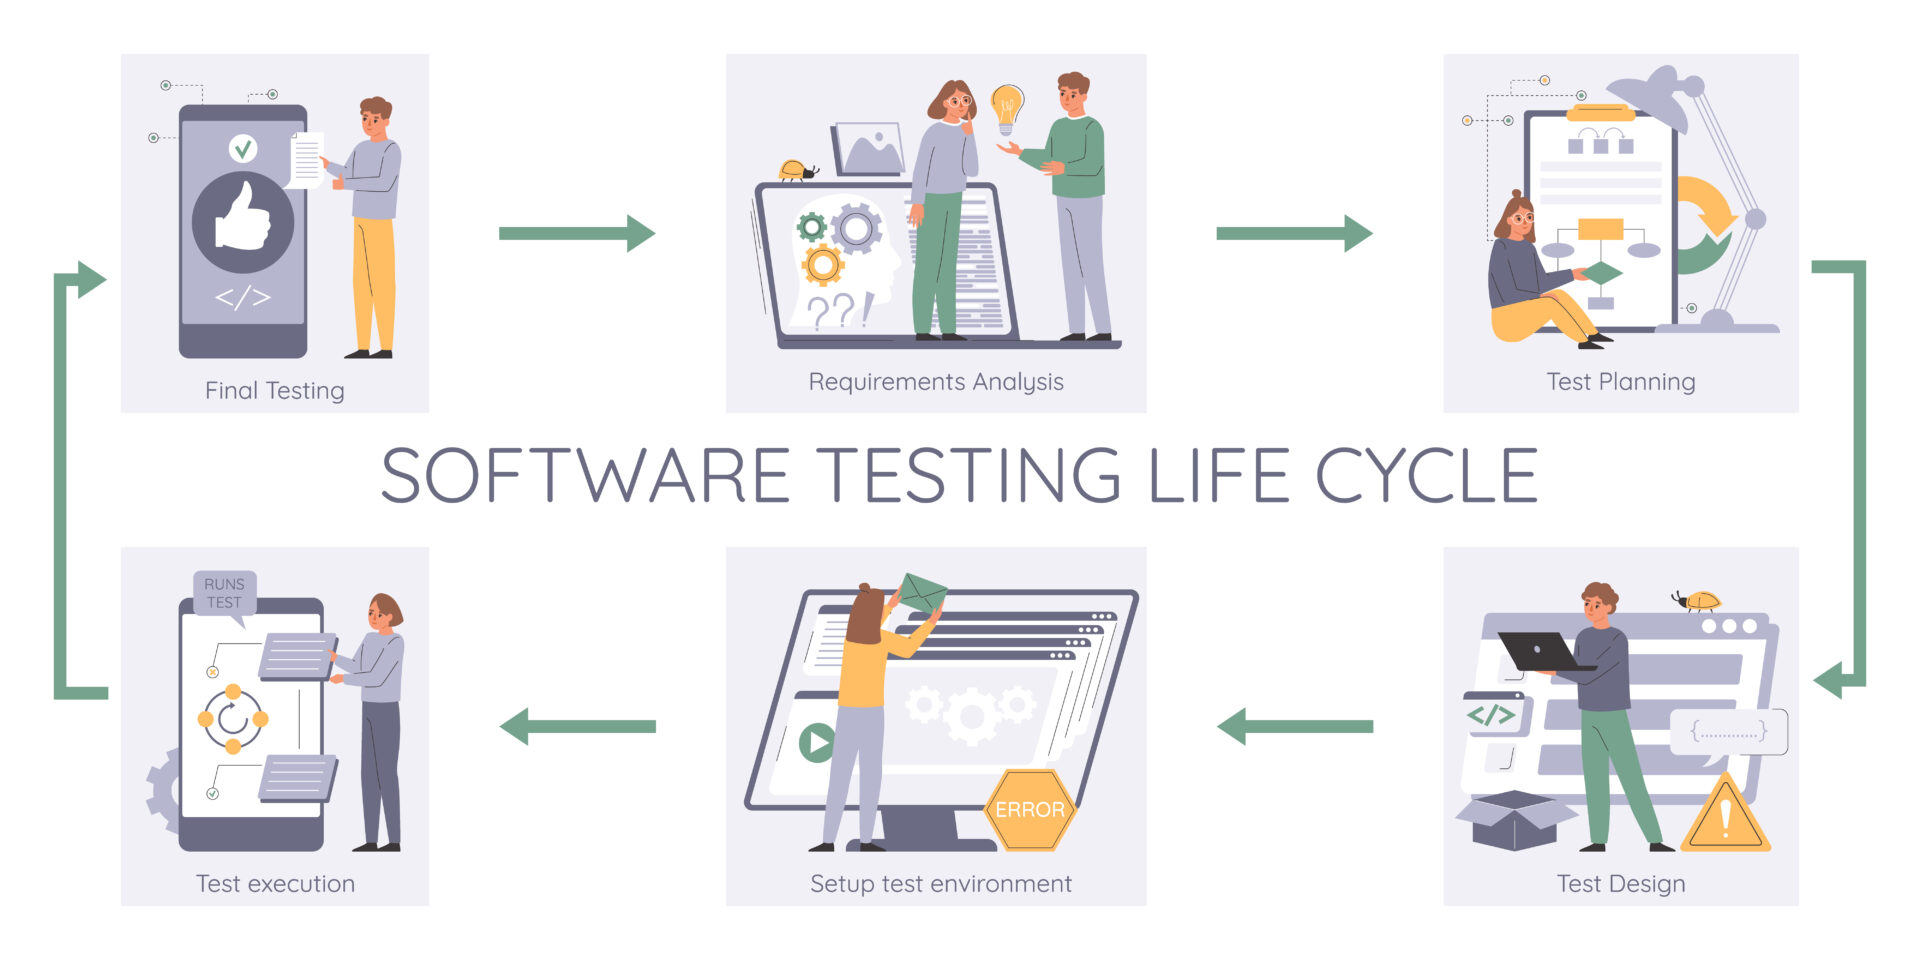 Test software life cicle - Aton - Immagine di macrovector su Freepik